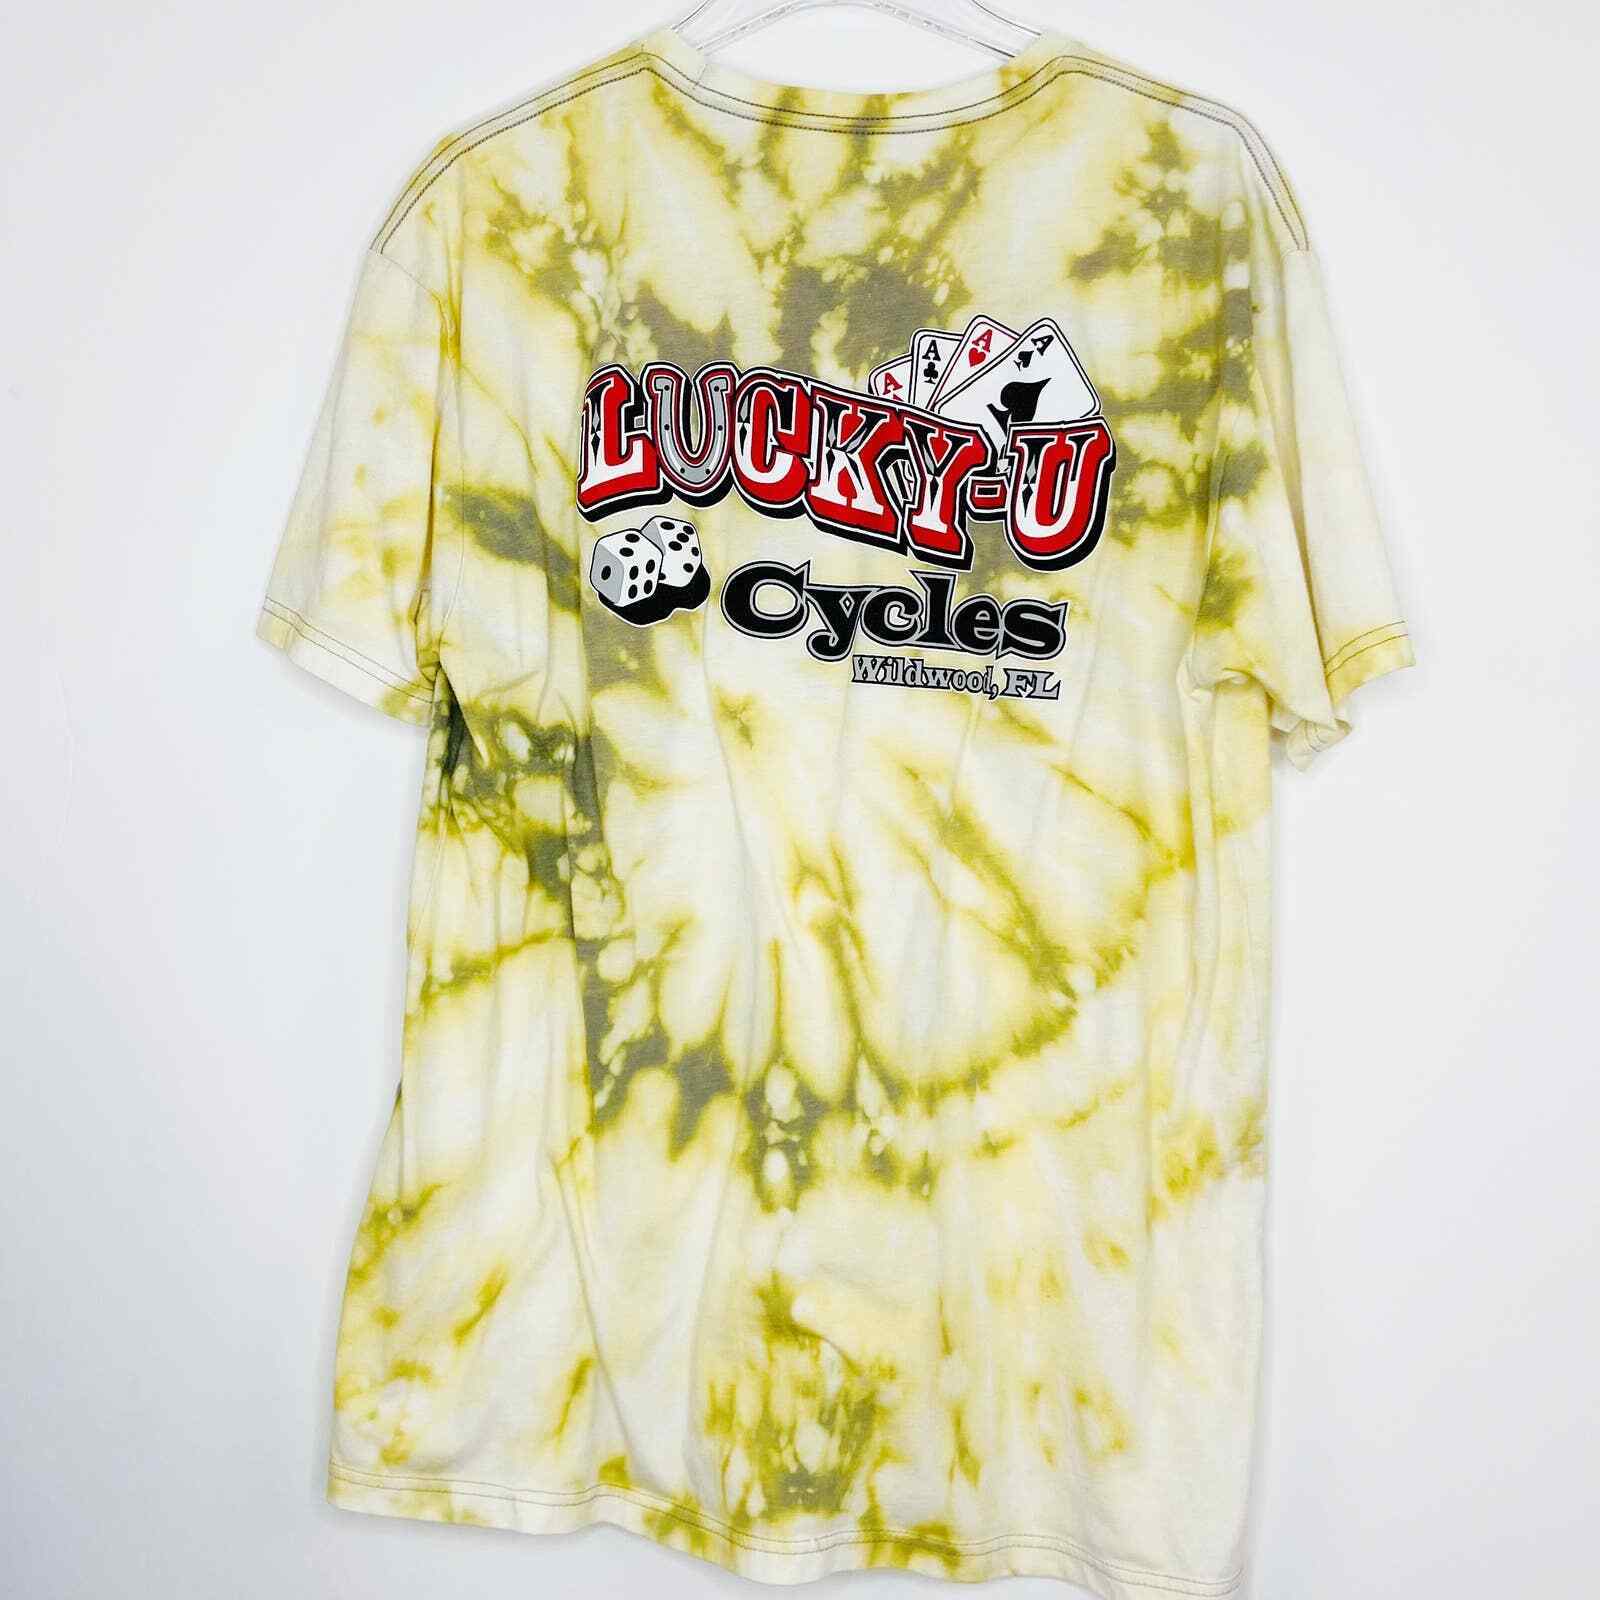 Lucky-u Cycles Custom Bleached T-shirt Sz L - image 2